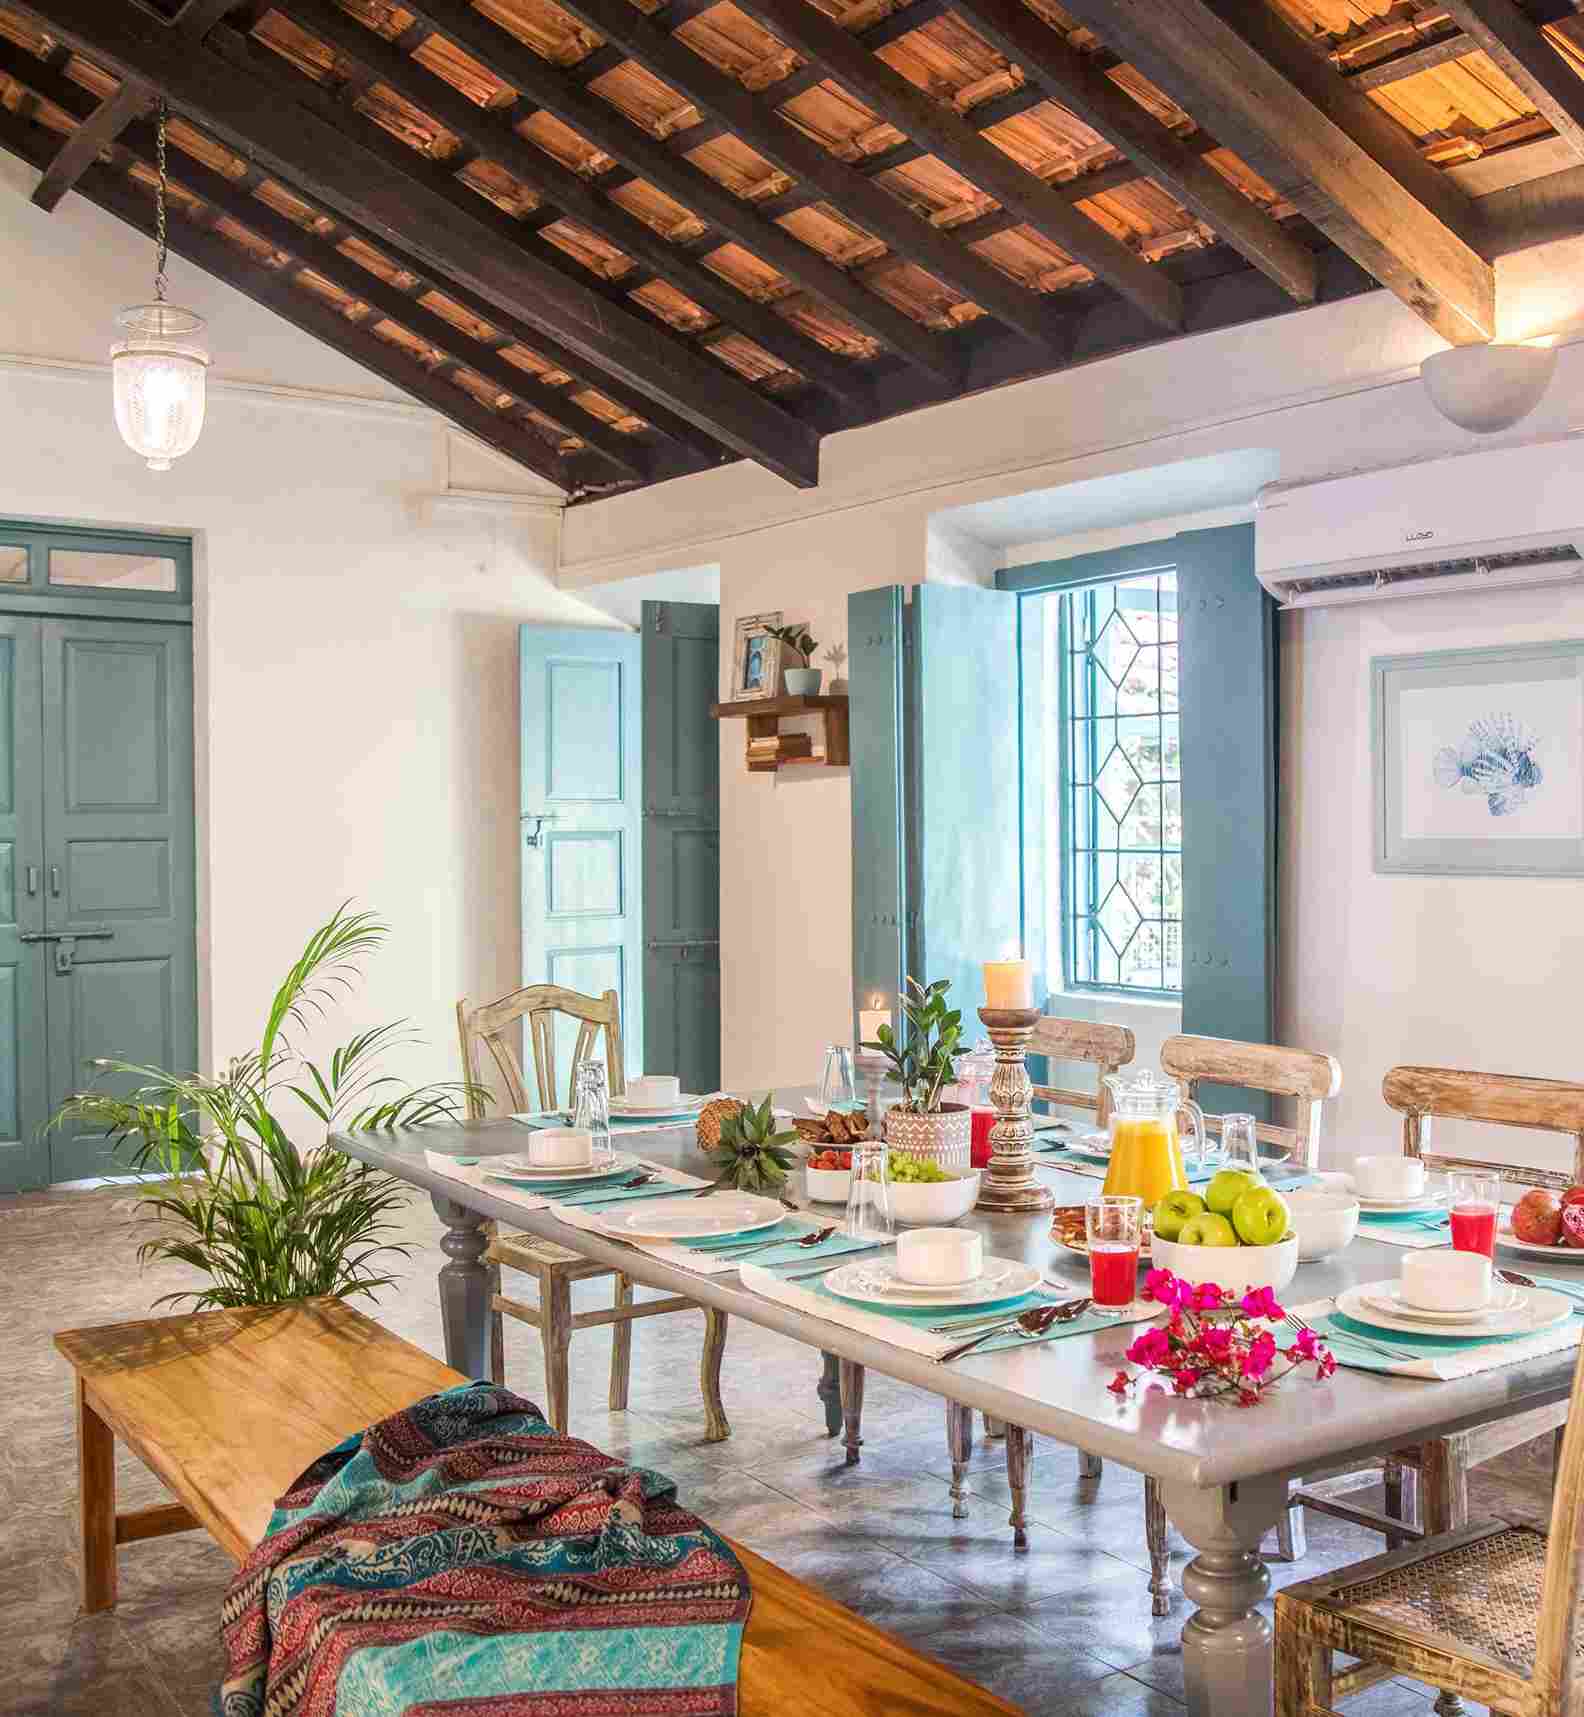 Villa Saudade di Arpora, Goa adalah rumah warisan yang telah diubah menjadi homestay